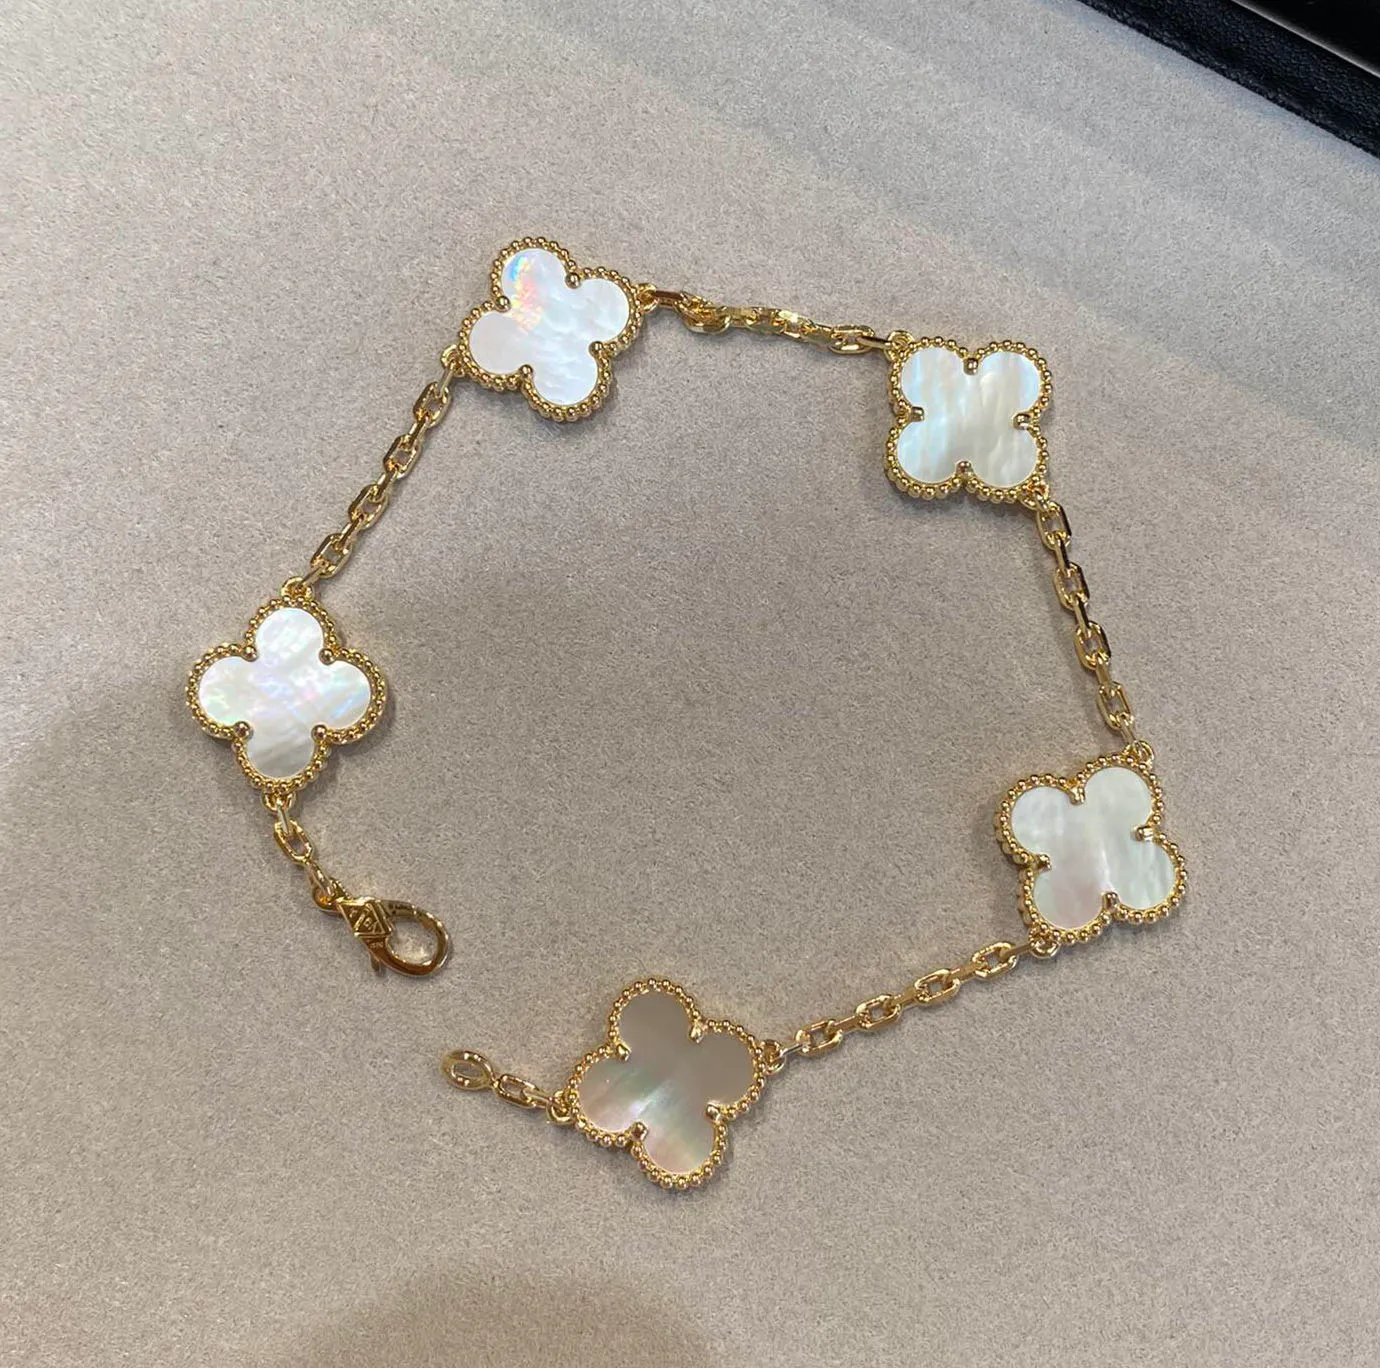 V gold material charm bangle five flowers bracelet in 18k gold plated +white shell WEB 001